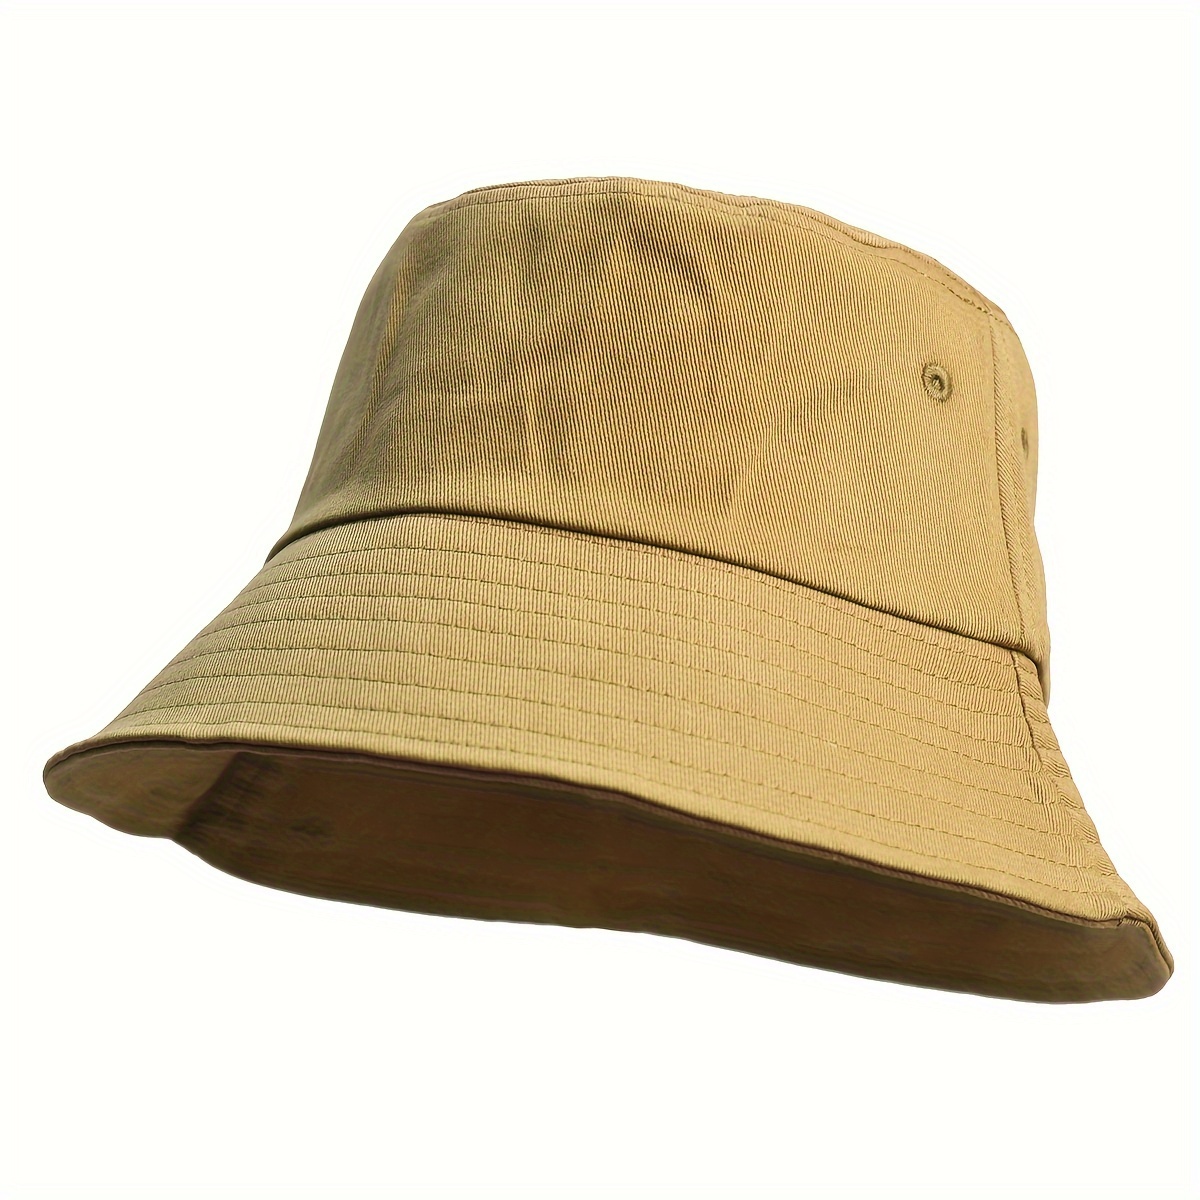 Big Head Man Large Size Sun Hat Women Blank Fisherman Hat Pure Cotton Panama Cap Plus Size Bucket Hats 22.83-24.8inch